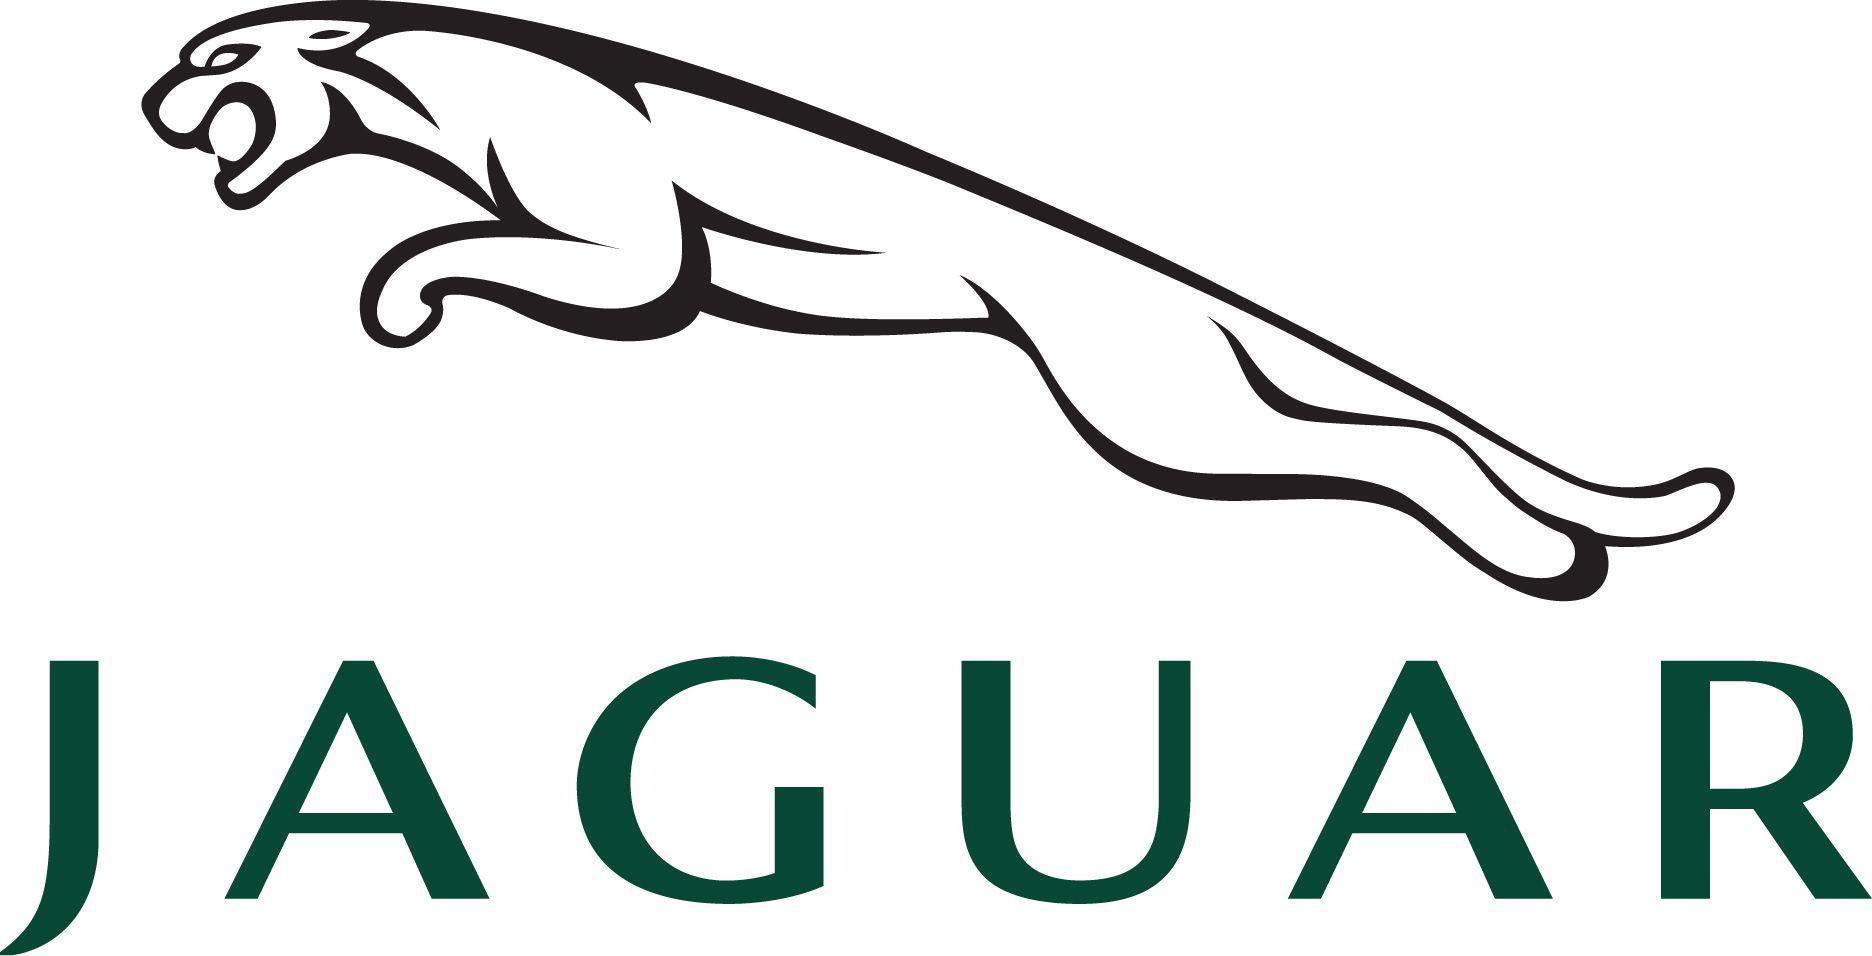 Jaguar Automotive Logo - Jaguar Logo, Jaguar Car Symbol Meaning and History. Car Brand Names.com